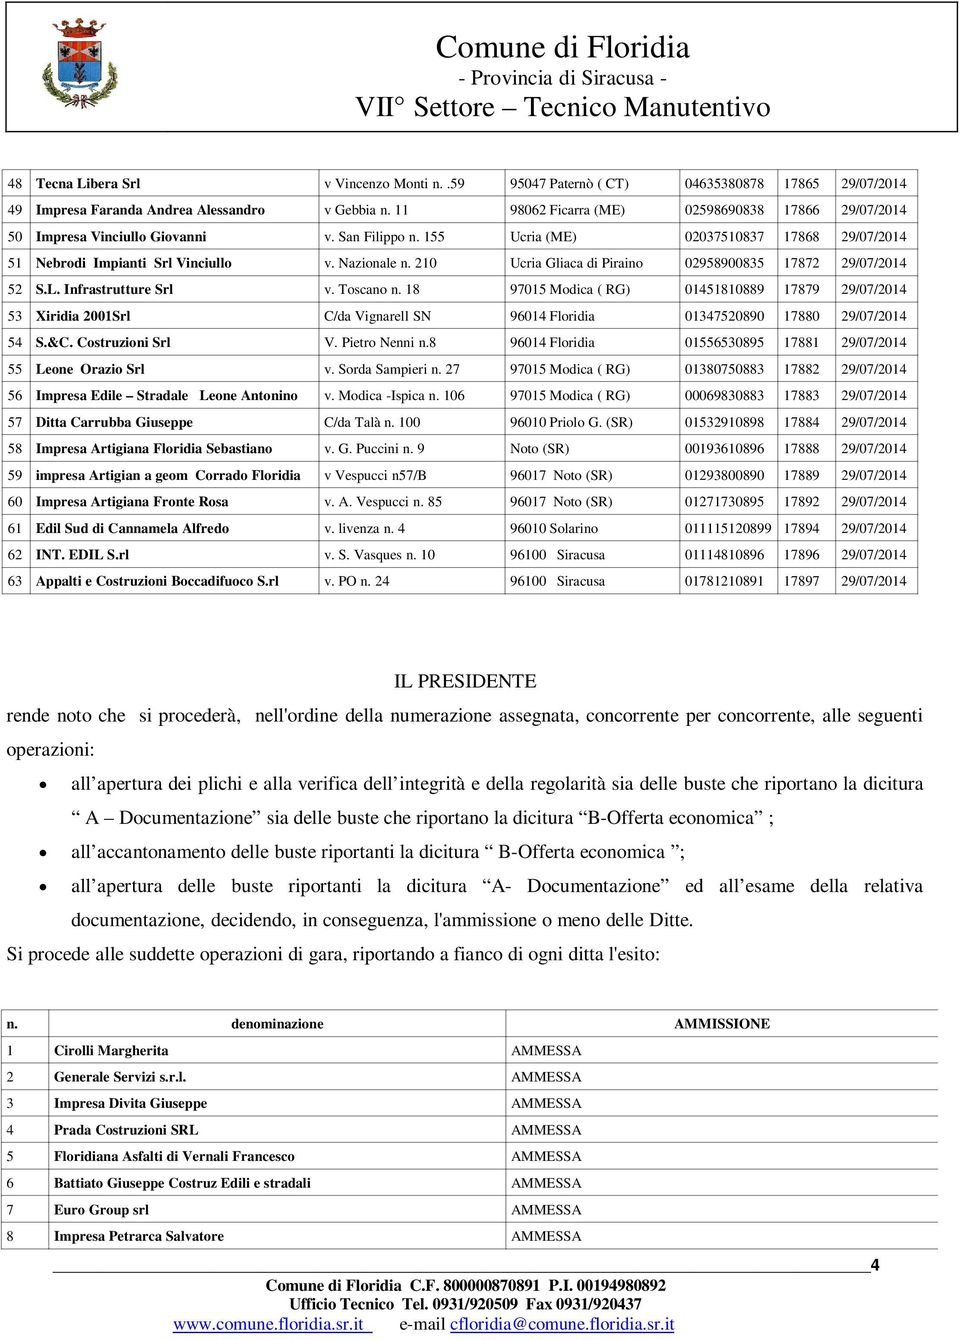 210 Ucria Gliaca di Piraino 02958900835 17872 29/07/2014 52 S.L. Infrastrutture Srl v. Toscano n.